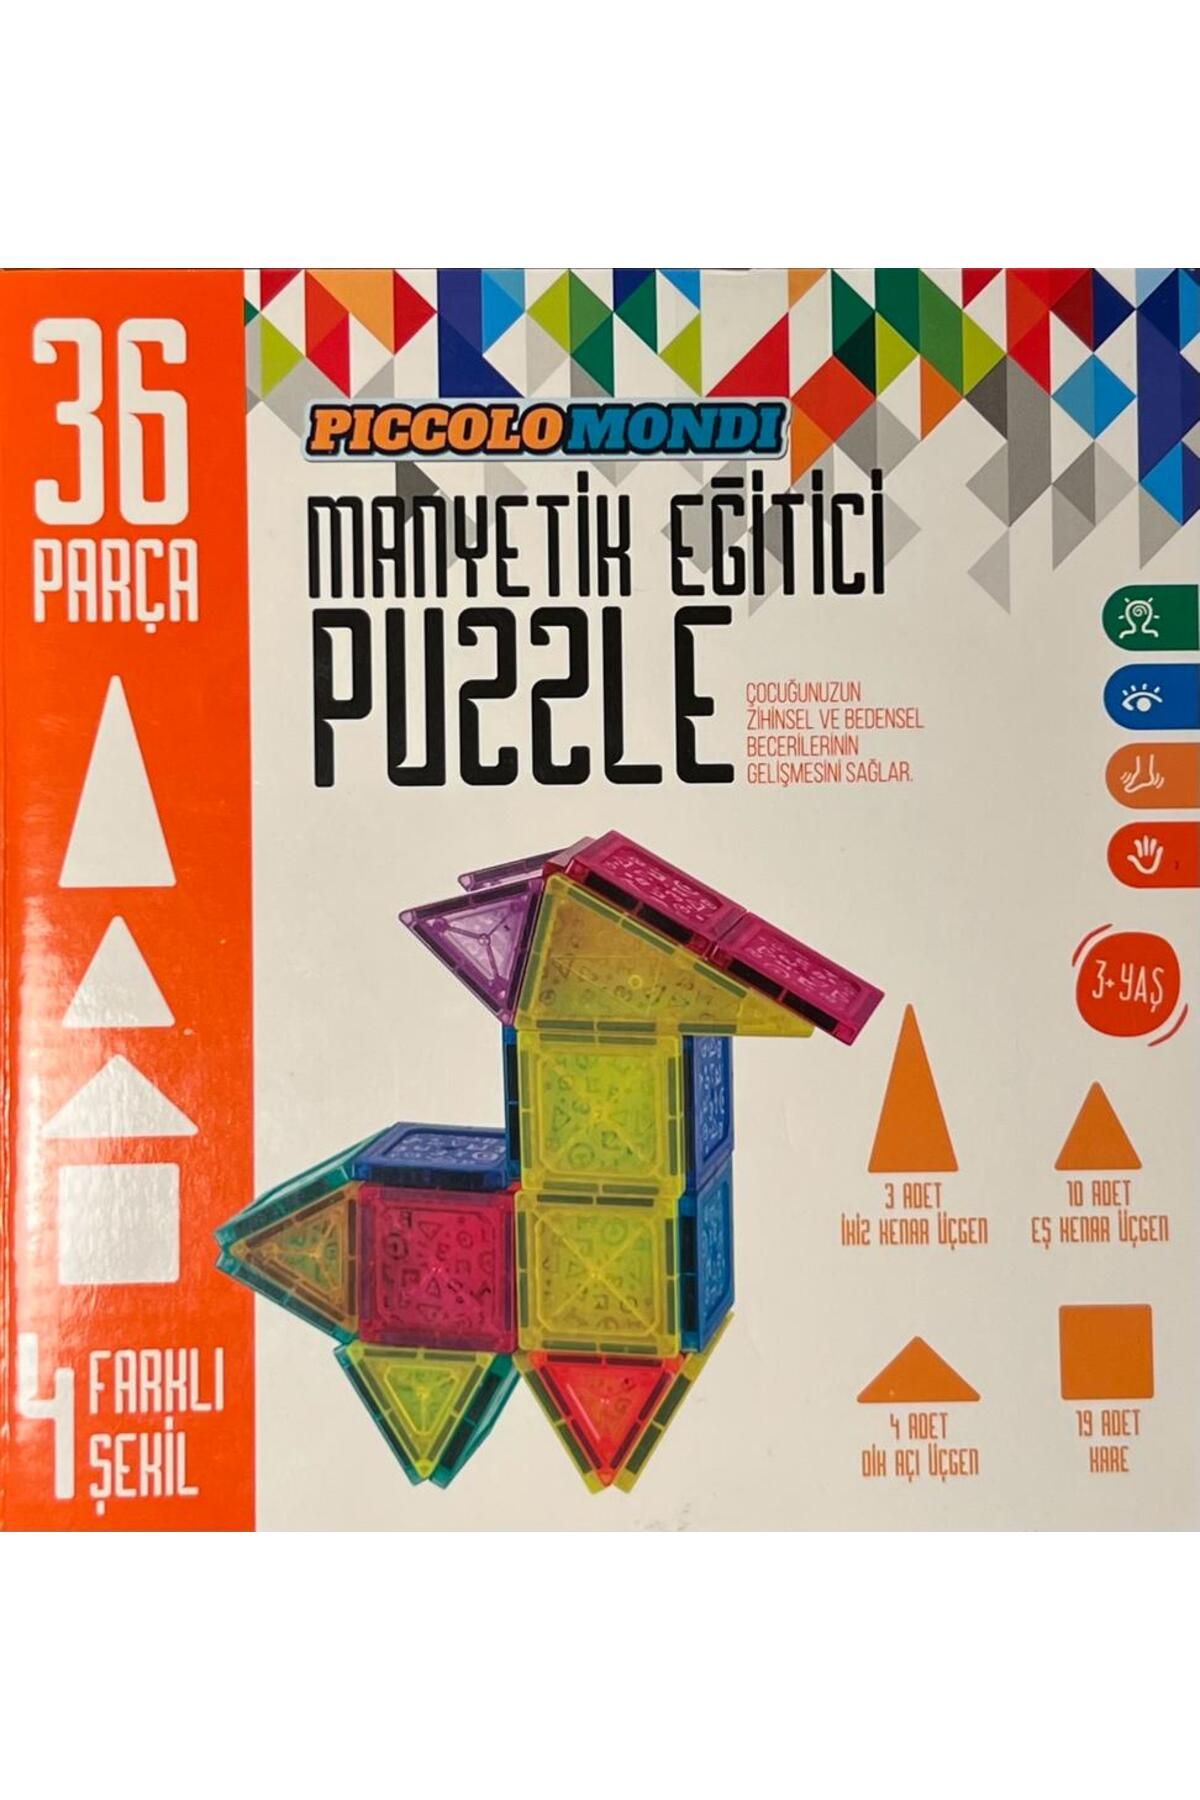 Piccolo Mondi MANYETİK EĞİTİCİ PUZZLE SET 36 PARÇA 4 FARKLI ŞEKİL MANYETİK YAPI TAŞLARI